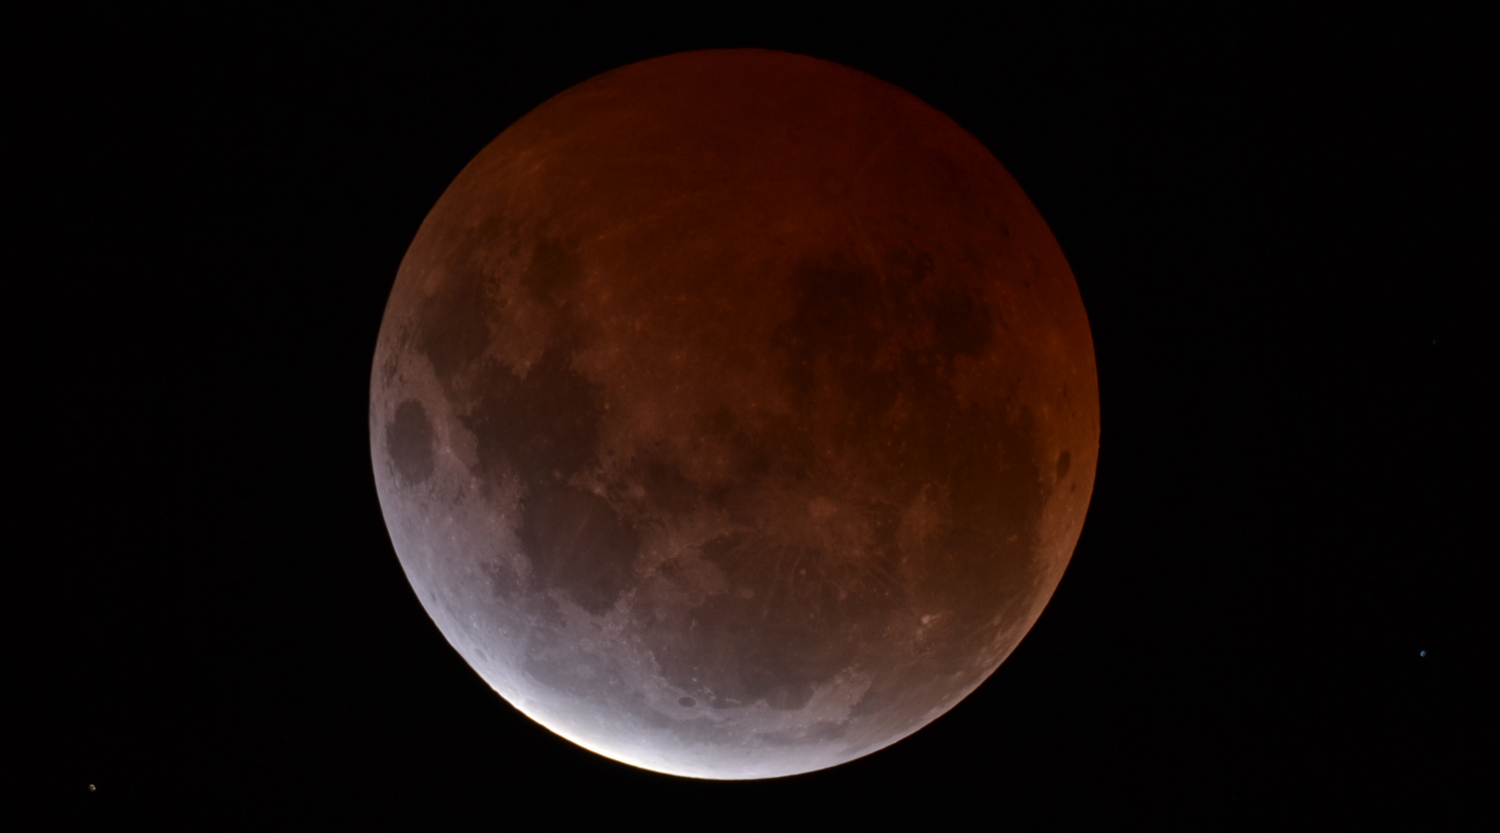 Total-Lunar-Eclipse-4th-April-2015-Dean-Hooper-Melbourne-Australia-Virtual-Telescope-Project-Webcast-Central-Totality